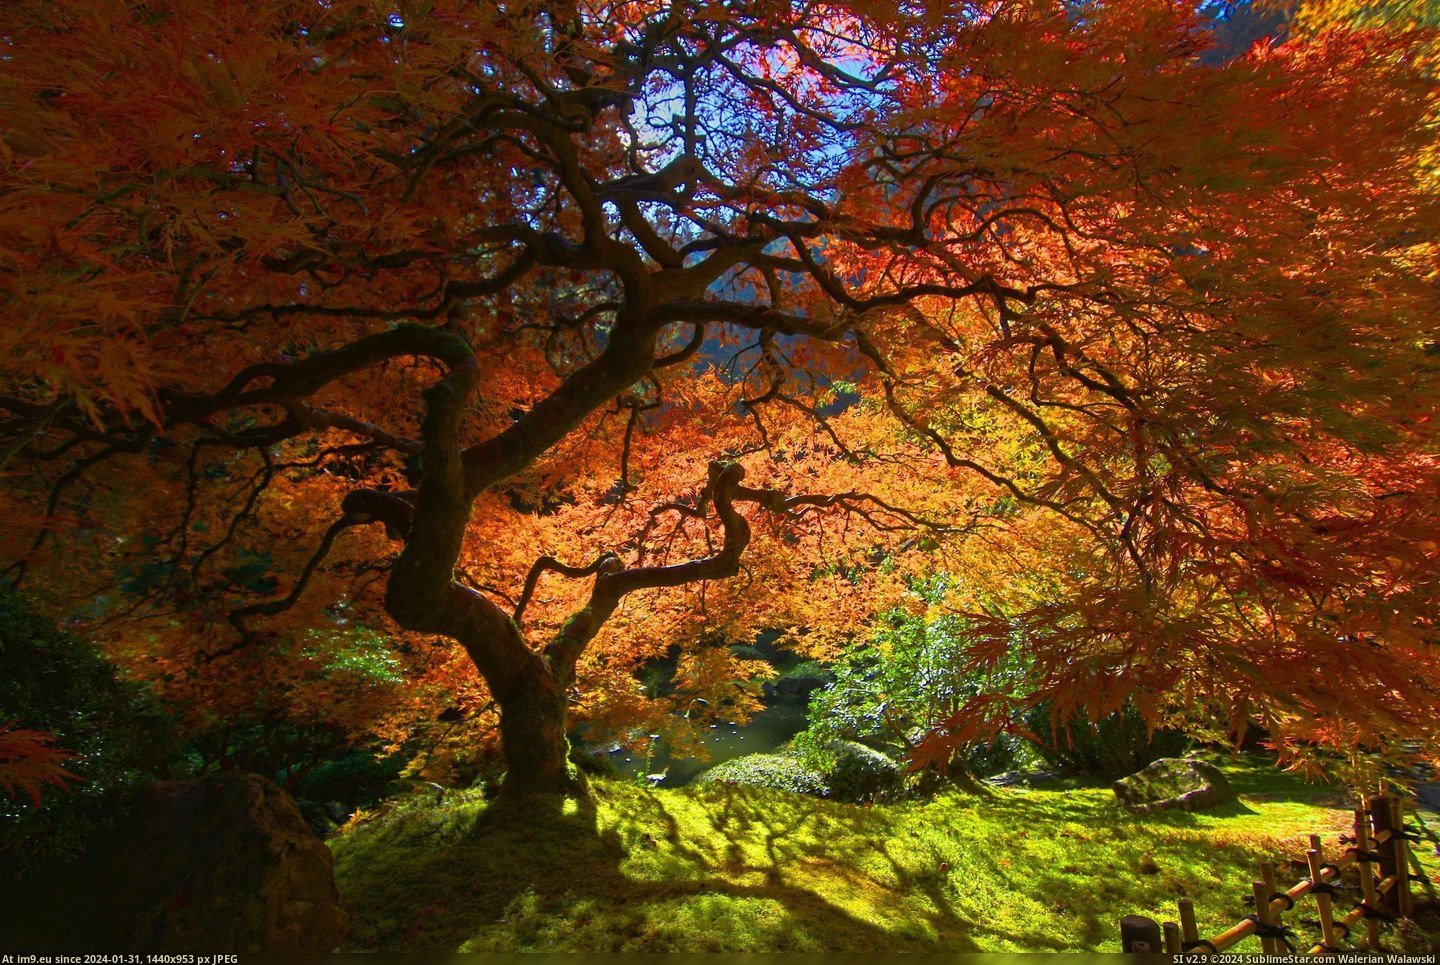 #Japanese #Maple #Portland [Pics] Japanese Maple in Portland Pic. (Изображение из альбом My r/PICS favs))